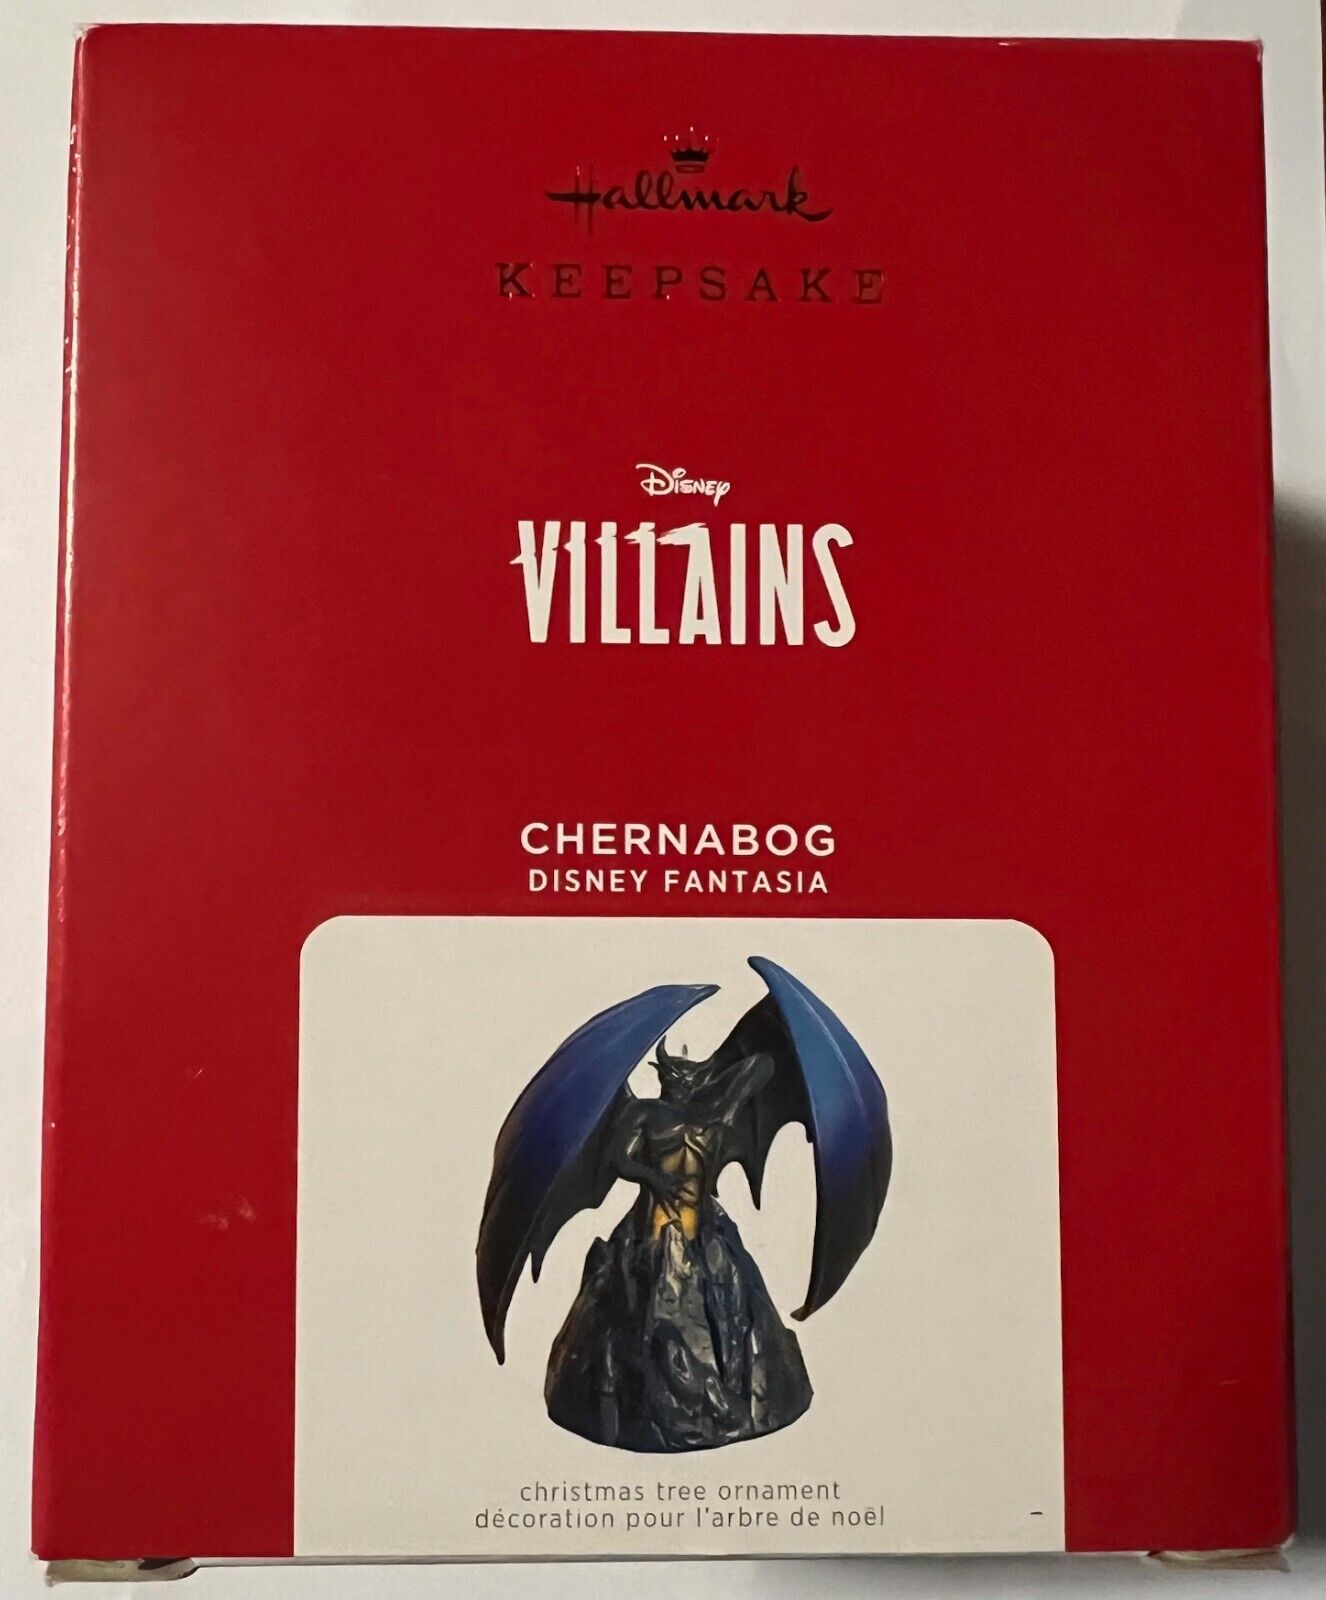 Hallmark Keepsake Chernabog Disney Fantasia Villains 2021 Ornament New